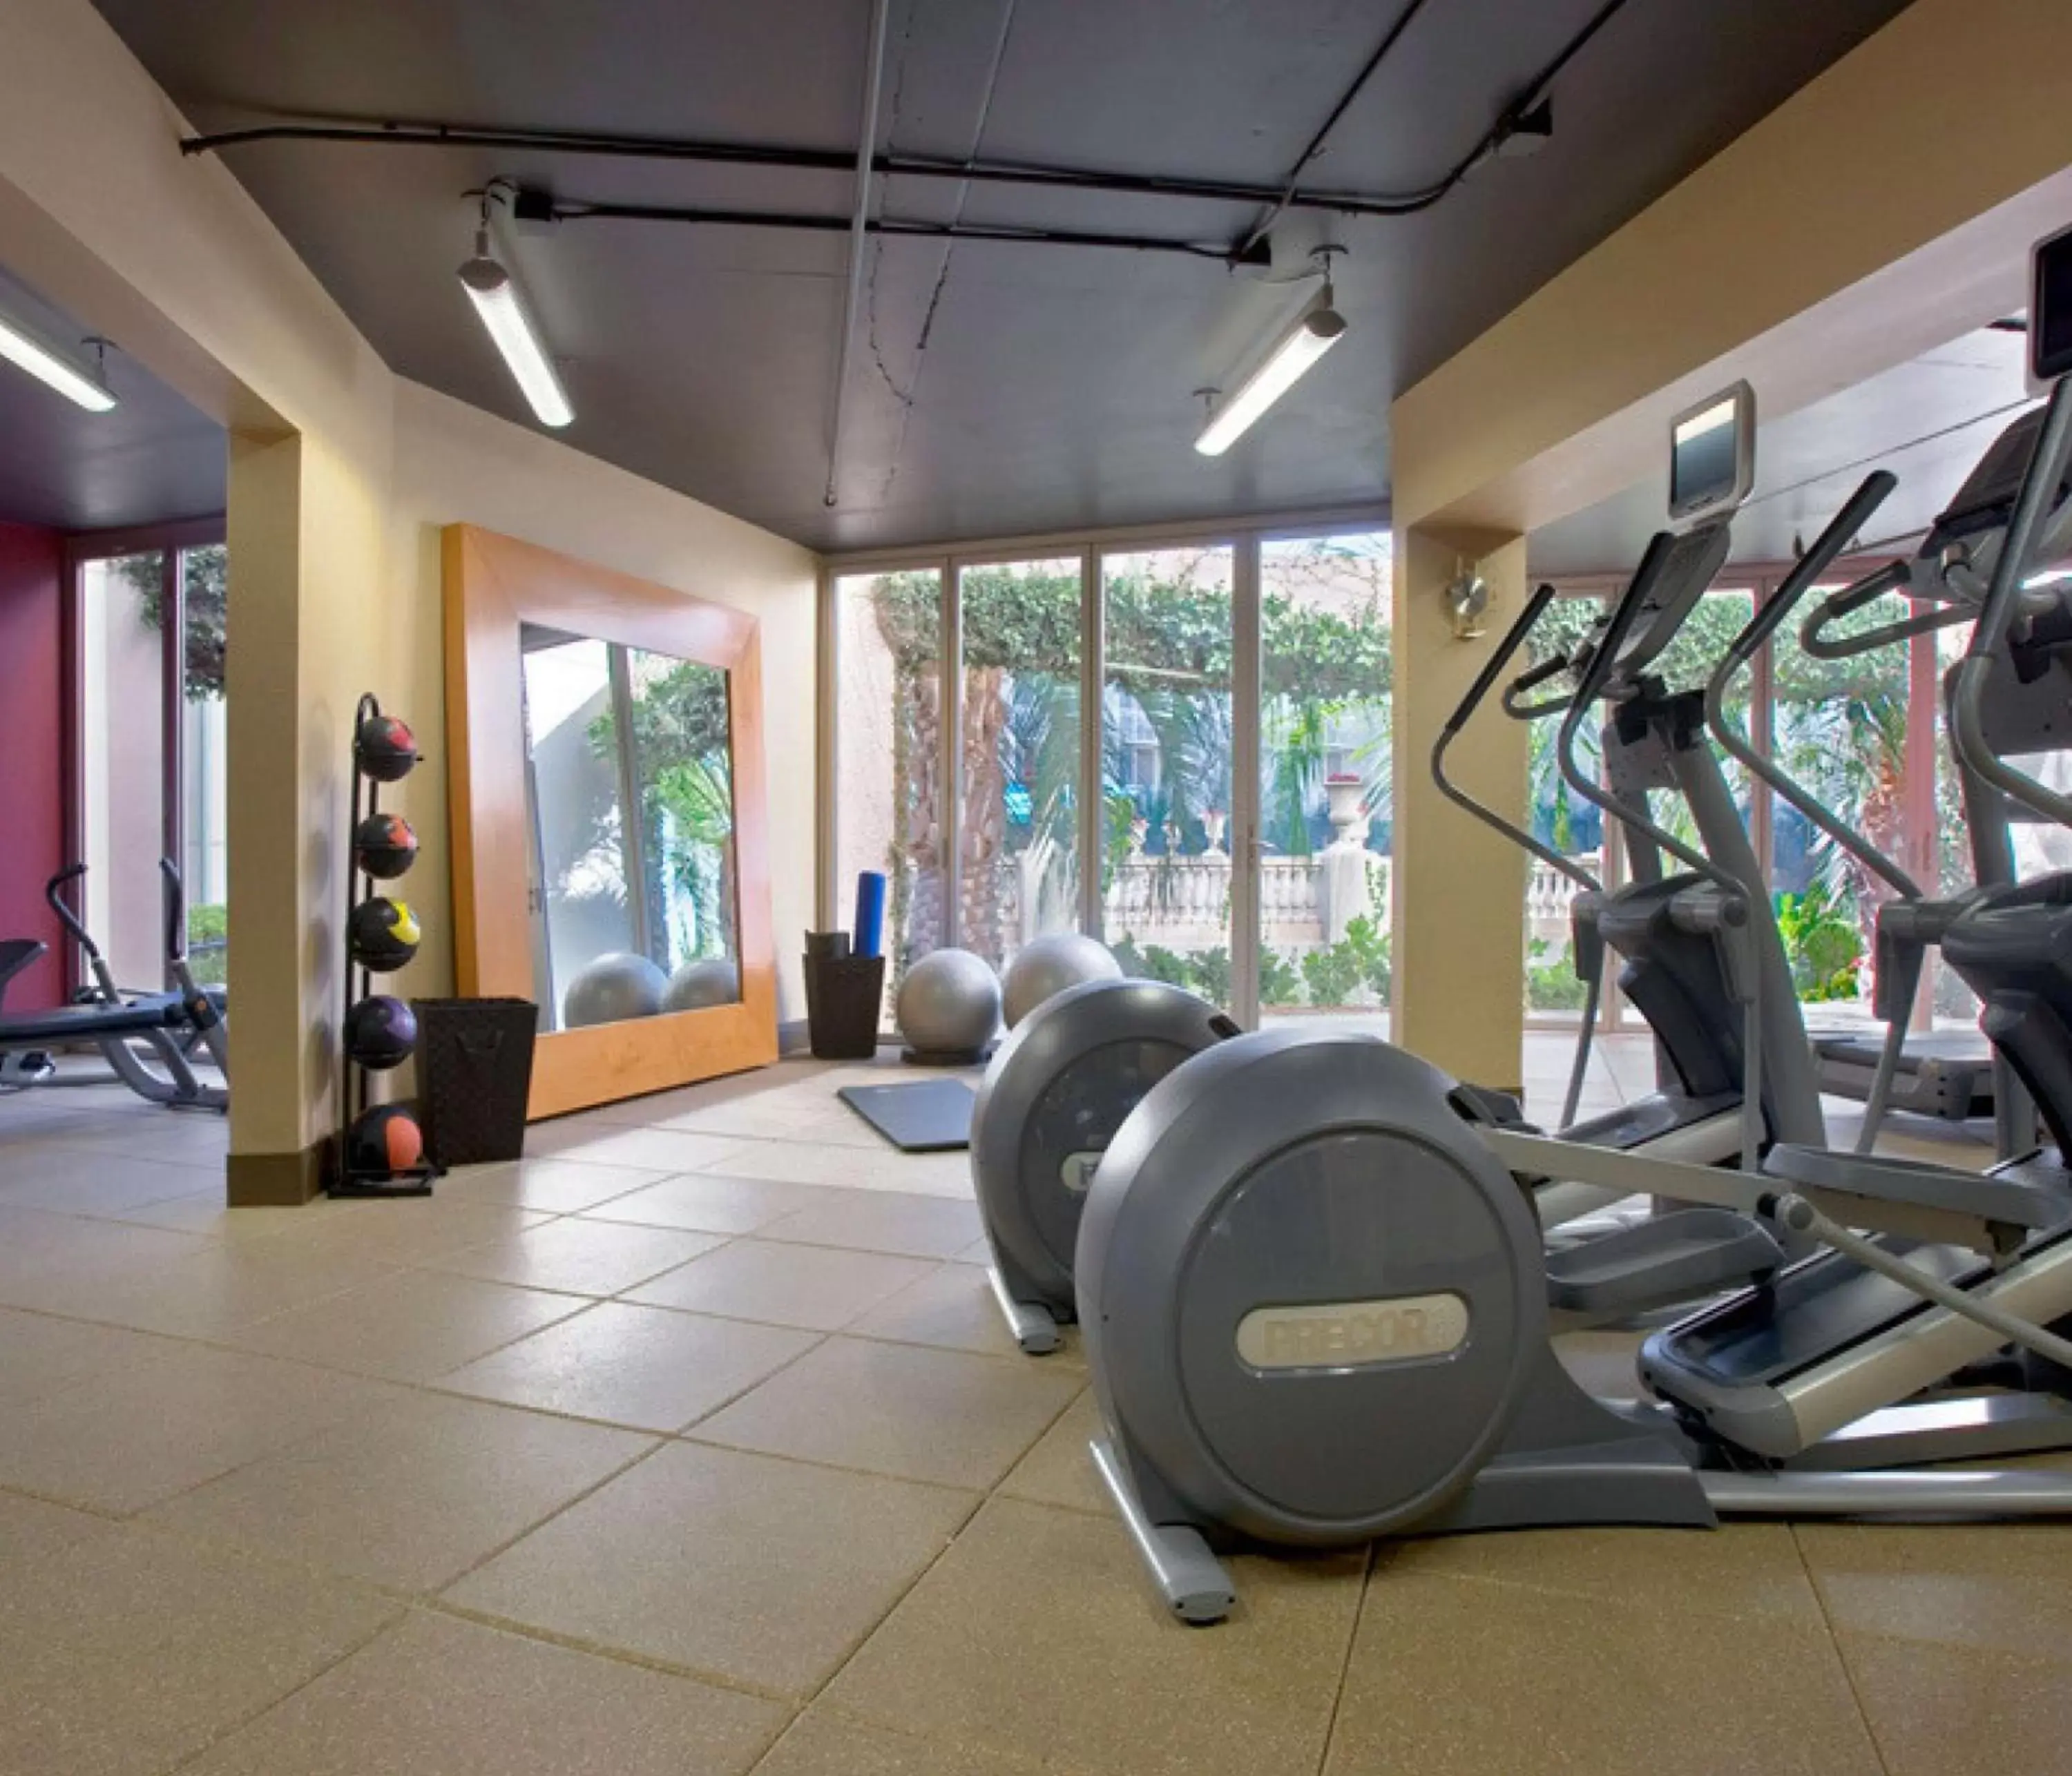 Fitness centre/facilities, Fitness Center/Facilities in Hilton La Jolla Torrey Pines